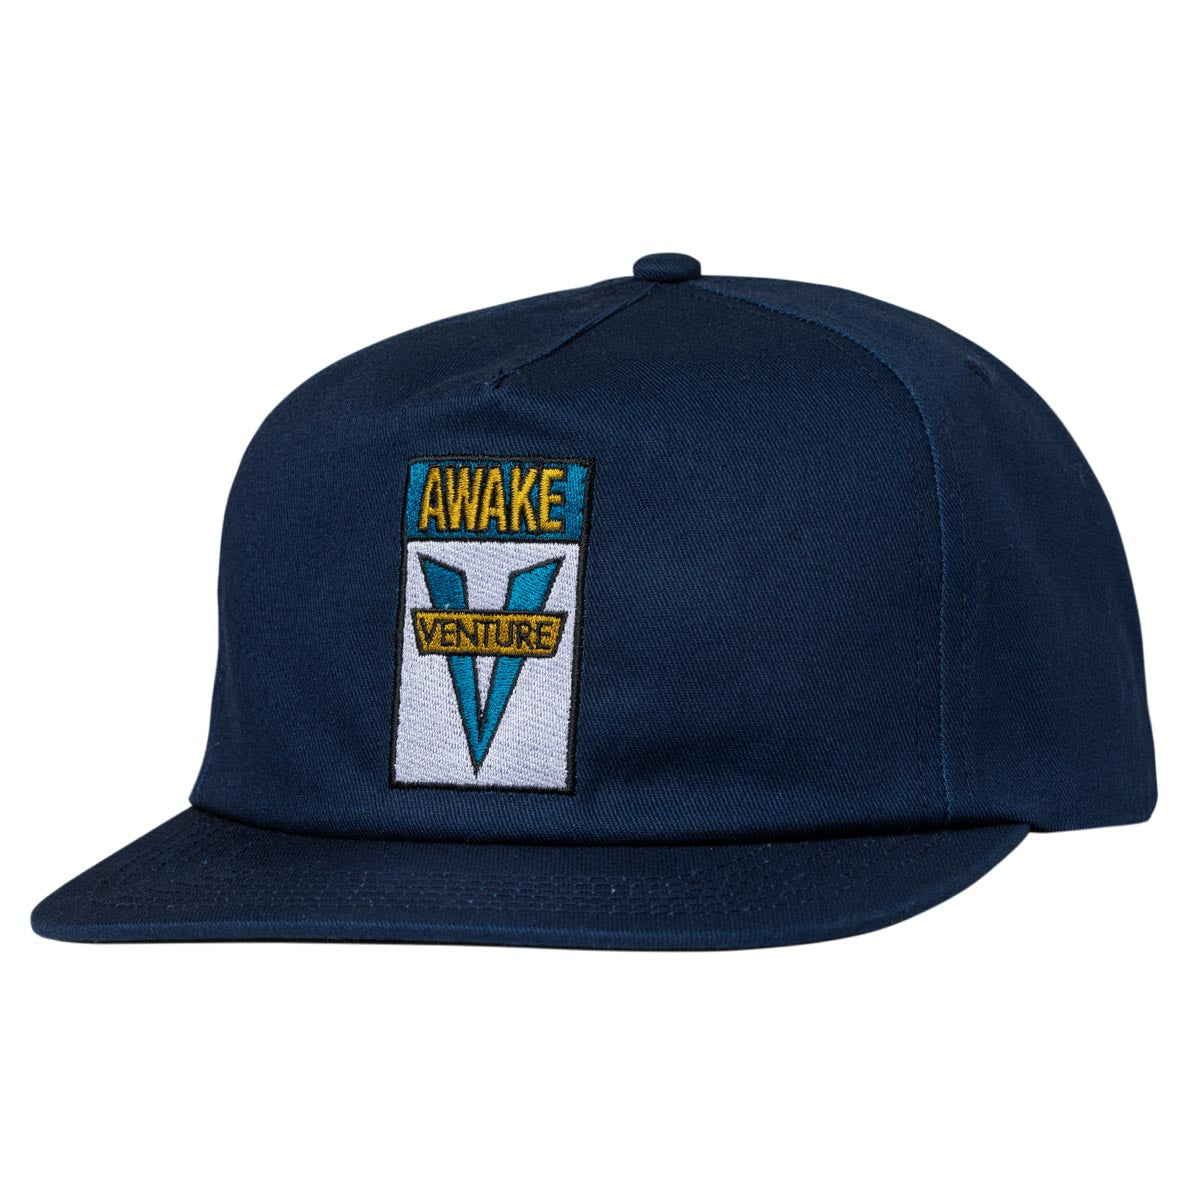 Venture Awake Adjustable Snapback Hat (Navy/Teal/Gold)